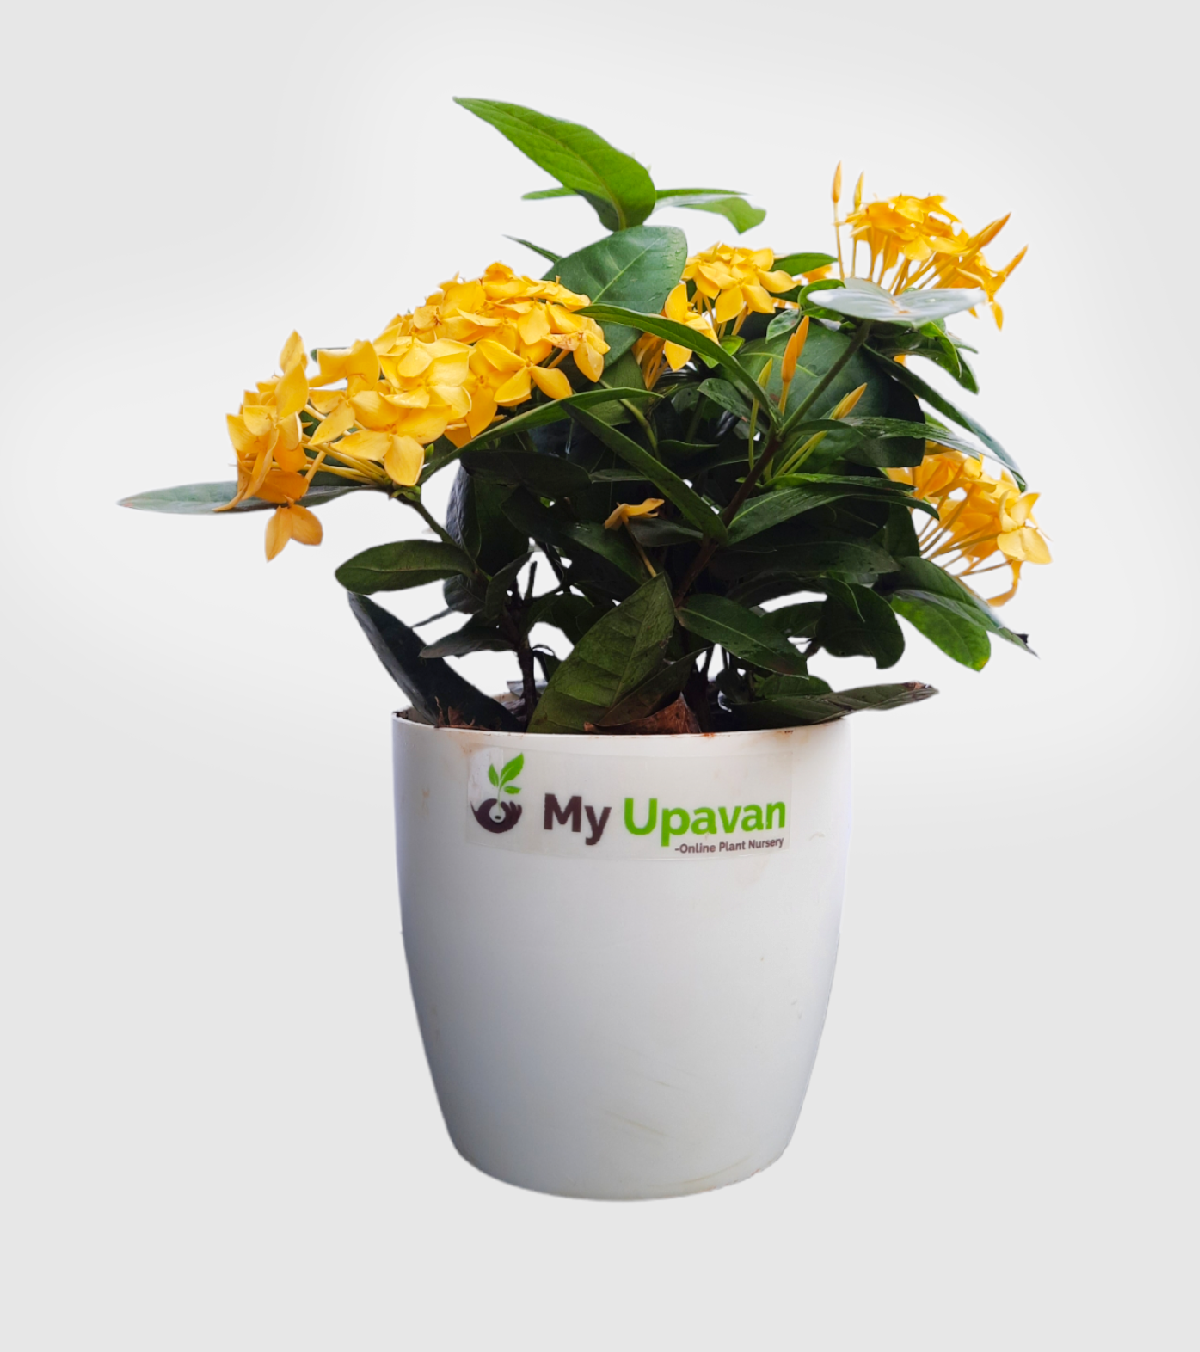 Ixora [Rugmini] Plant - Yellow